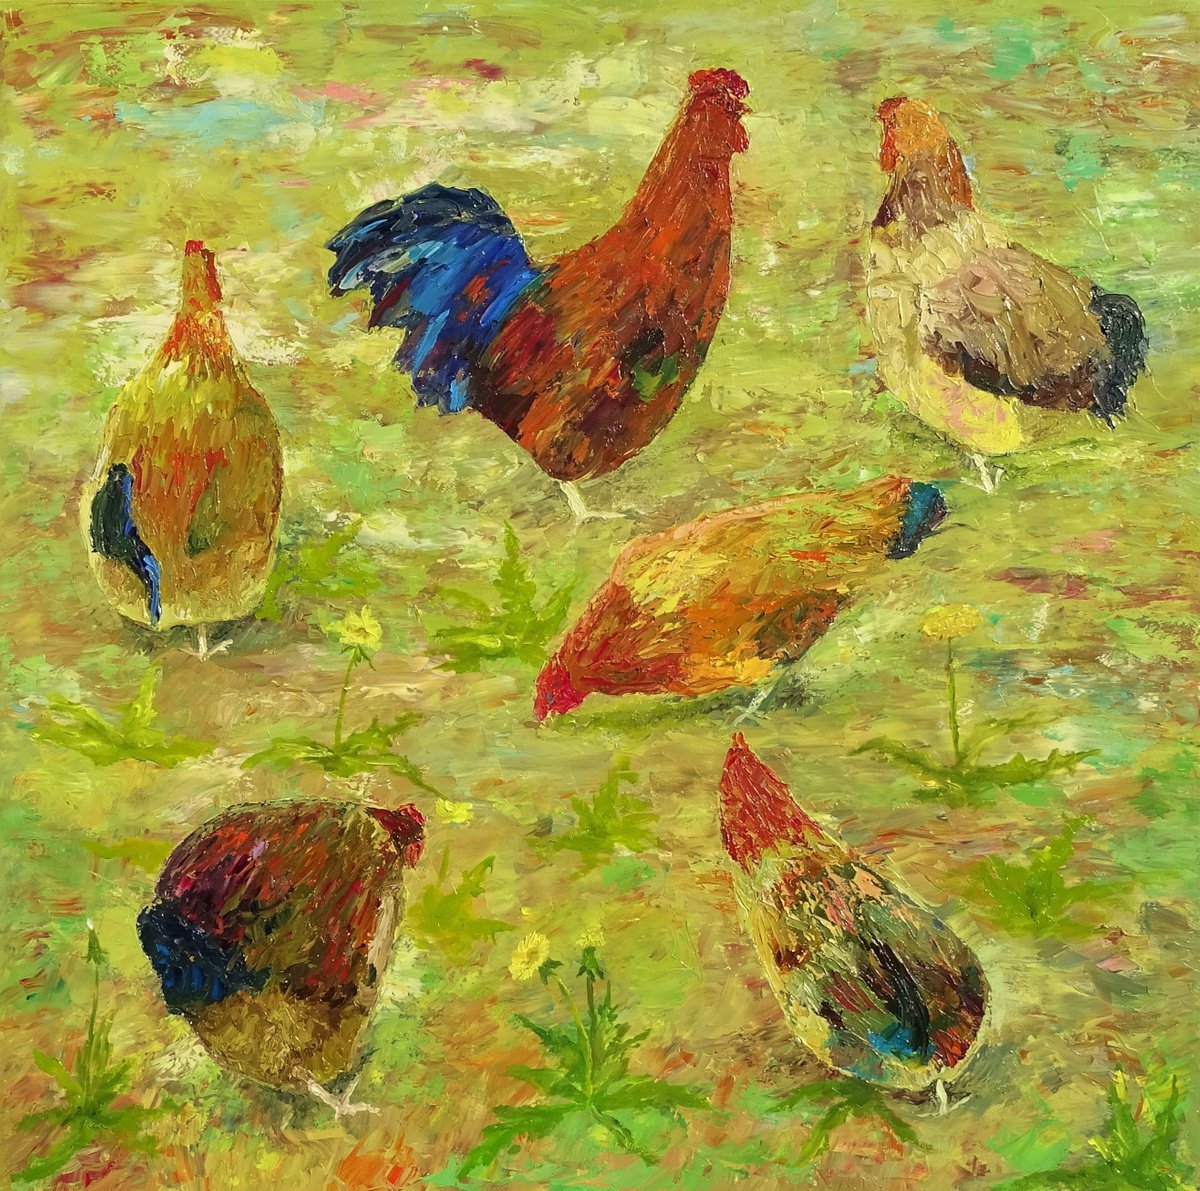 Chickens by Amochkin